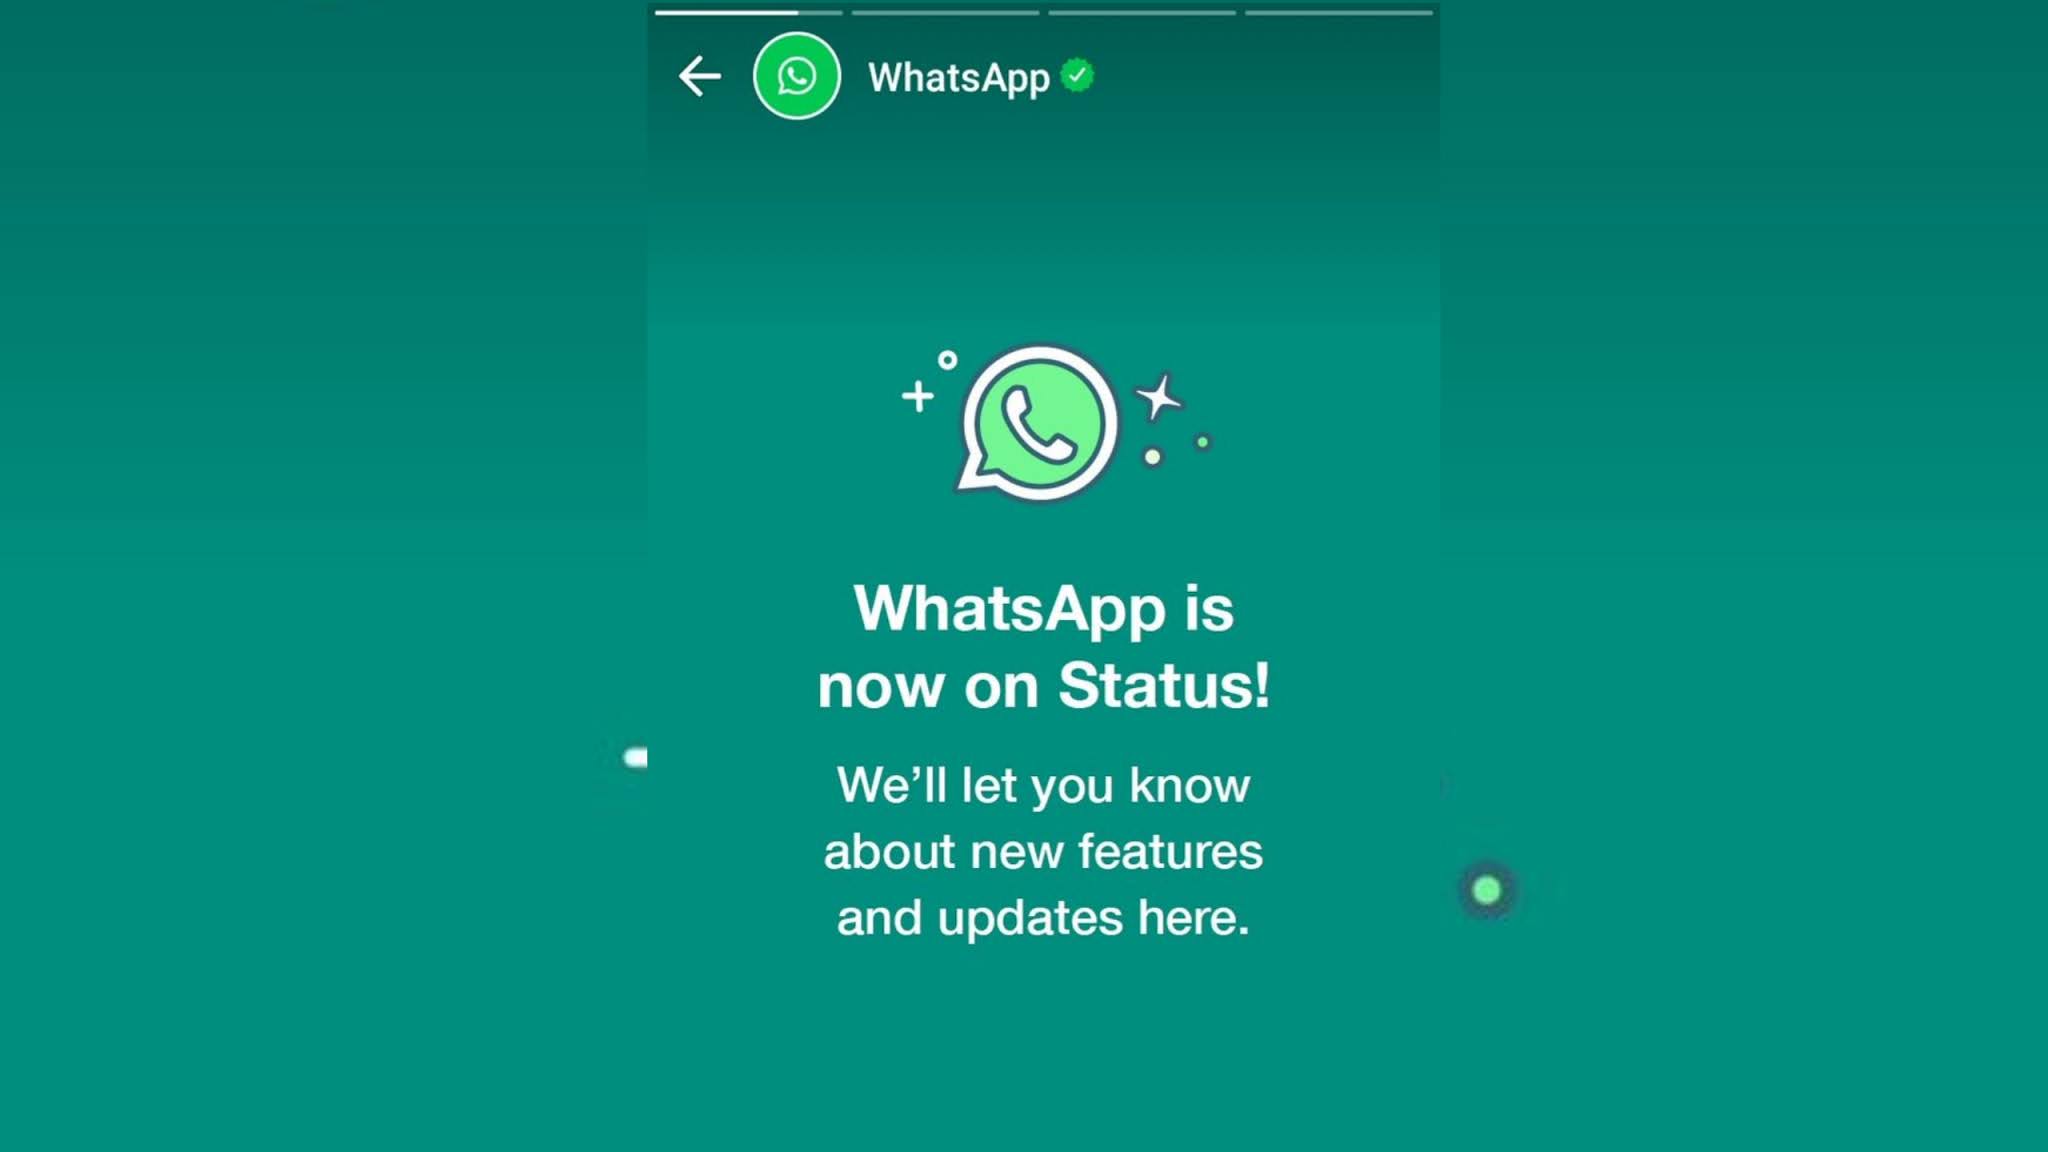 Heboh Muncul Pemberitahuan WhatsApp di Status Pengguna, Ada Apa?